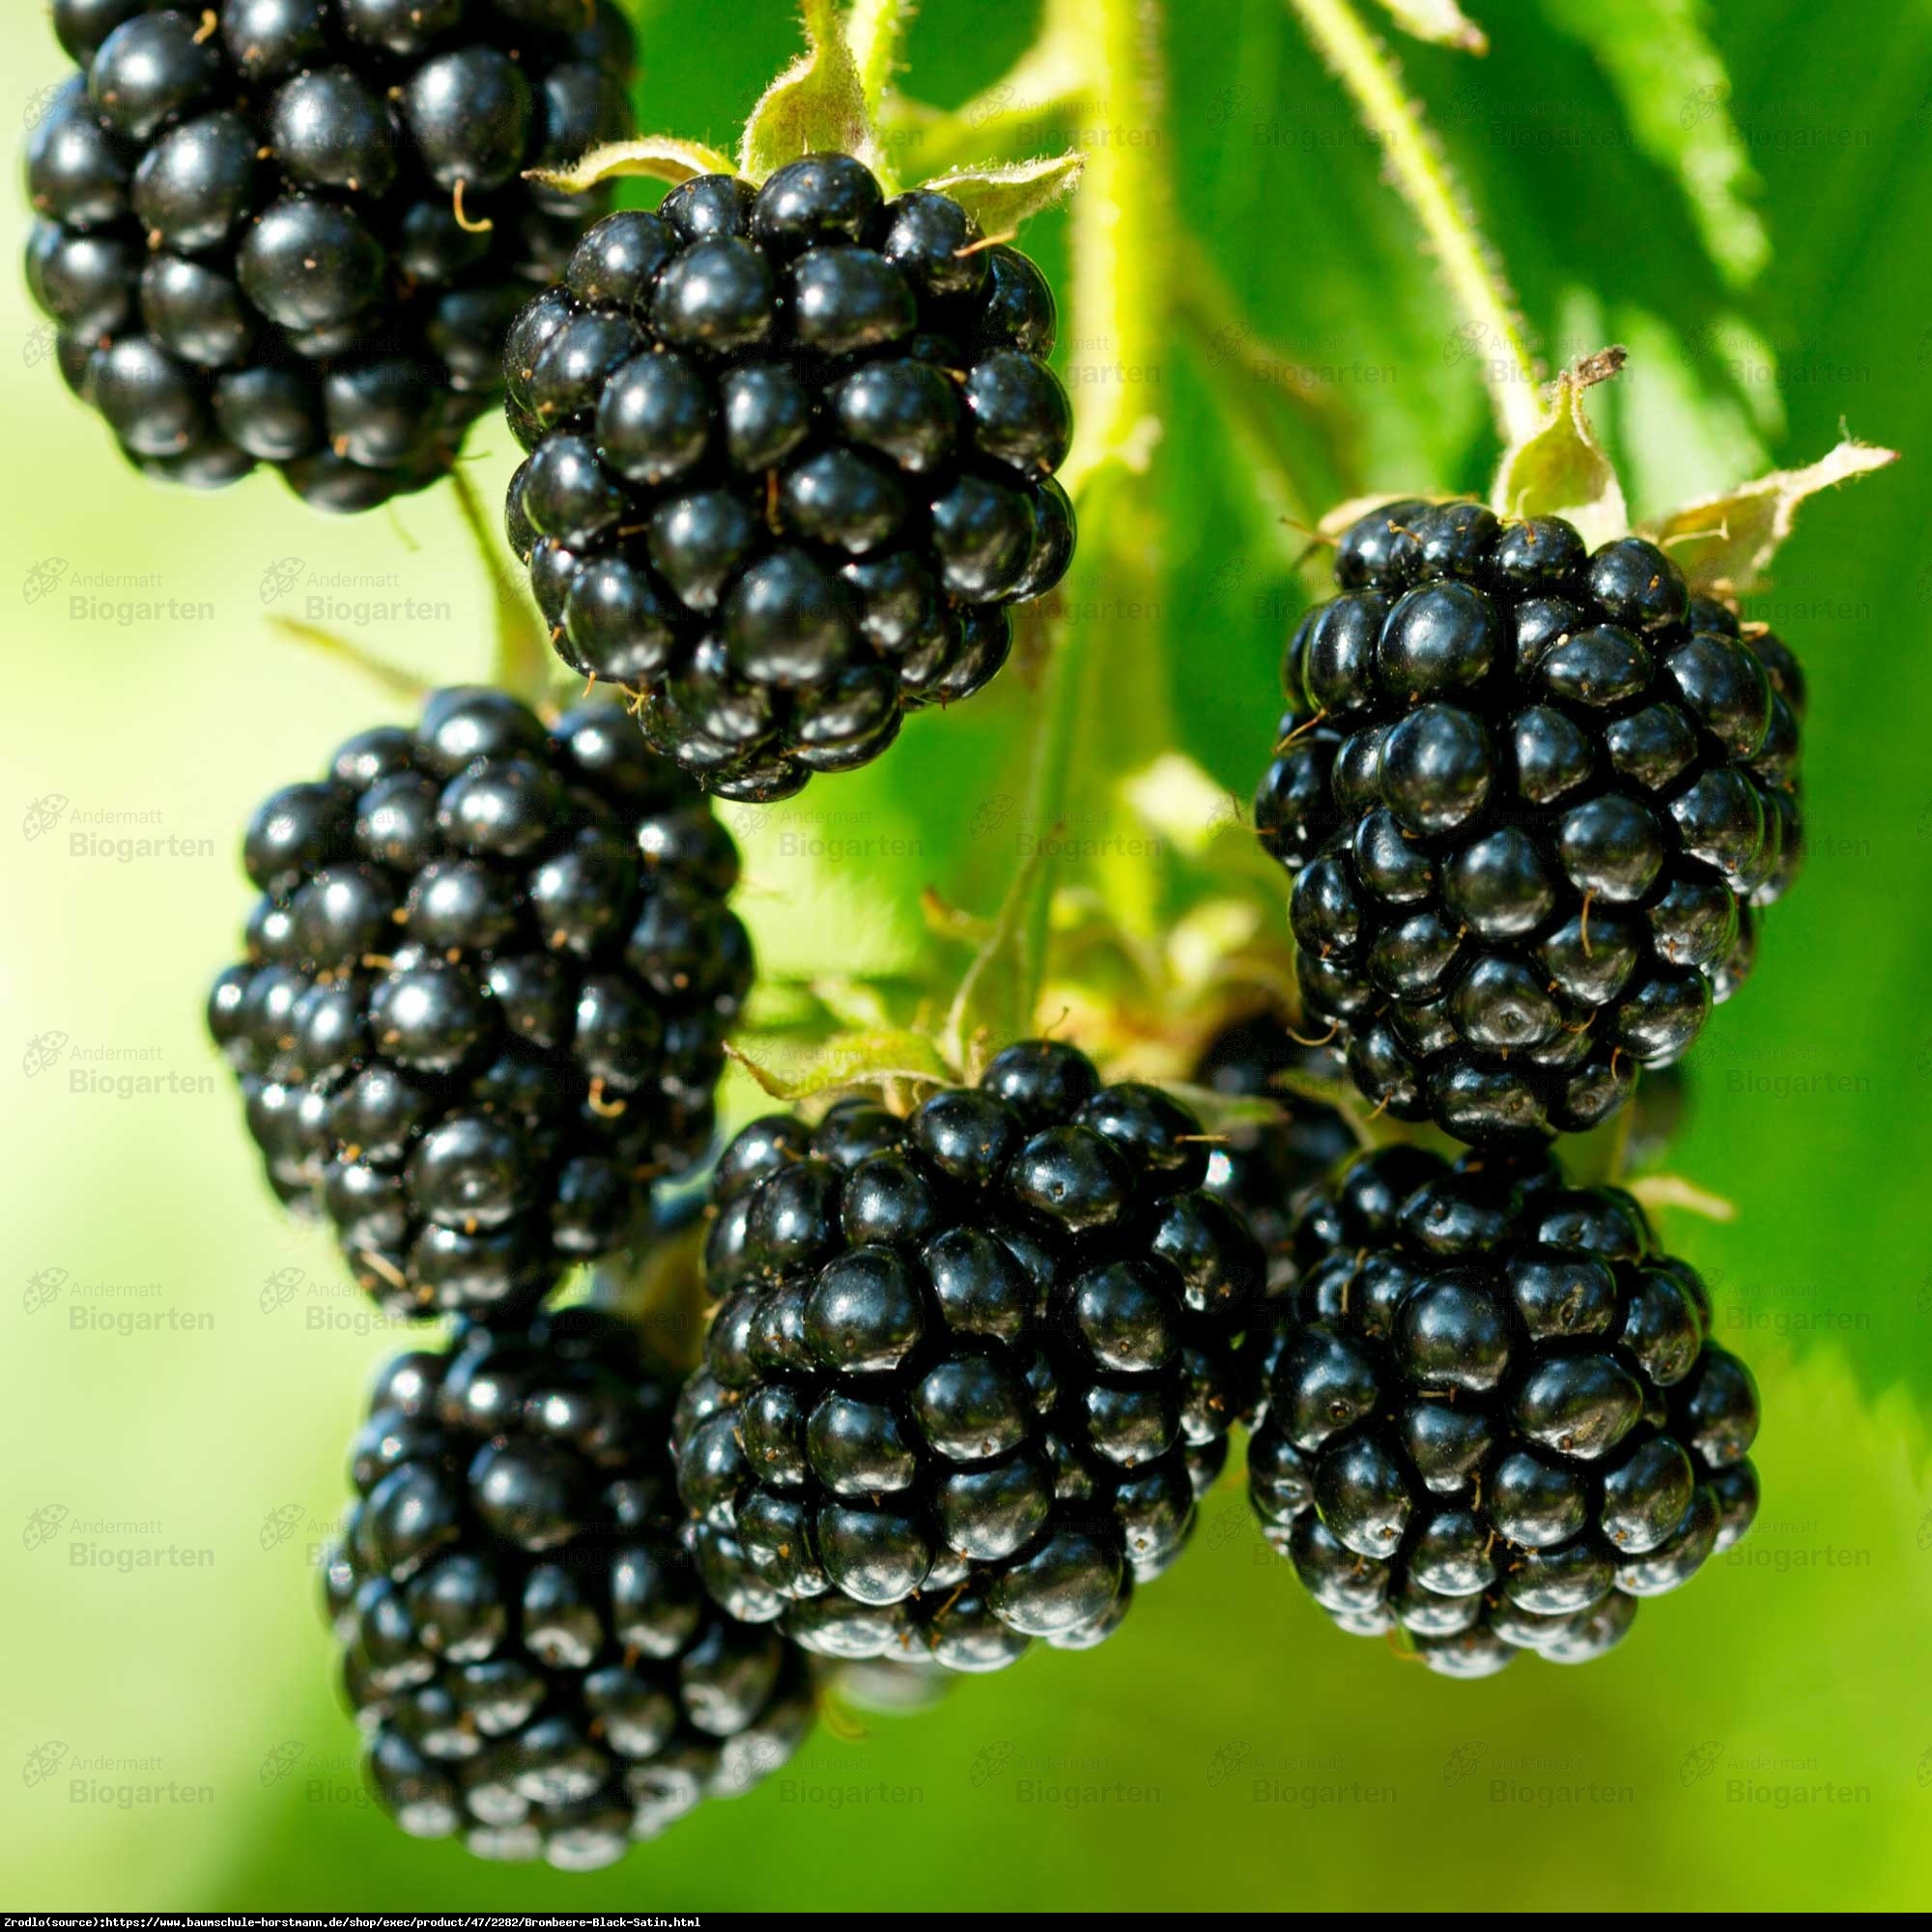 Jeżyna bezkolcowa Black Satin.DUŻY EGZEMPLARZ!!! - Rubus fruticosa  Black Satin